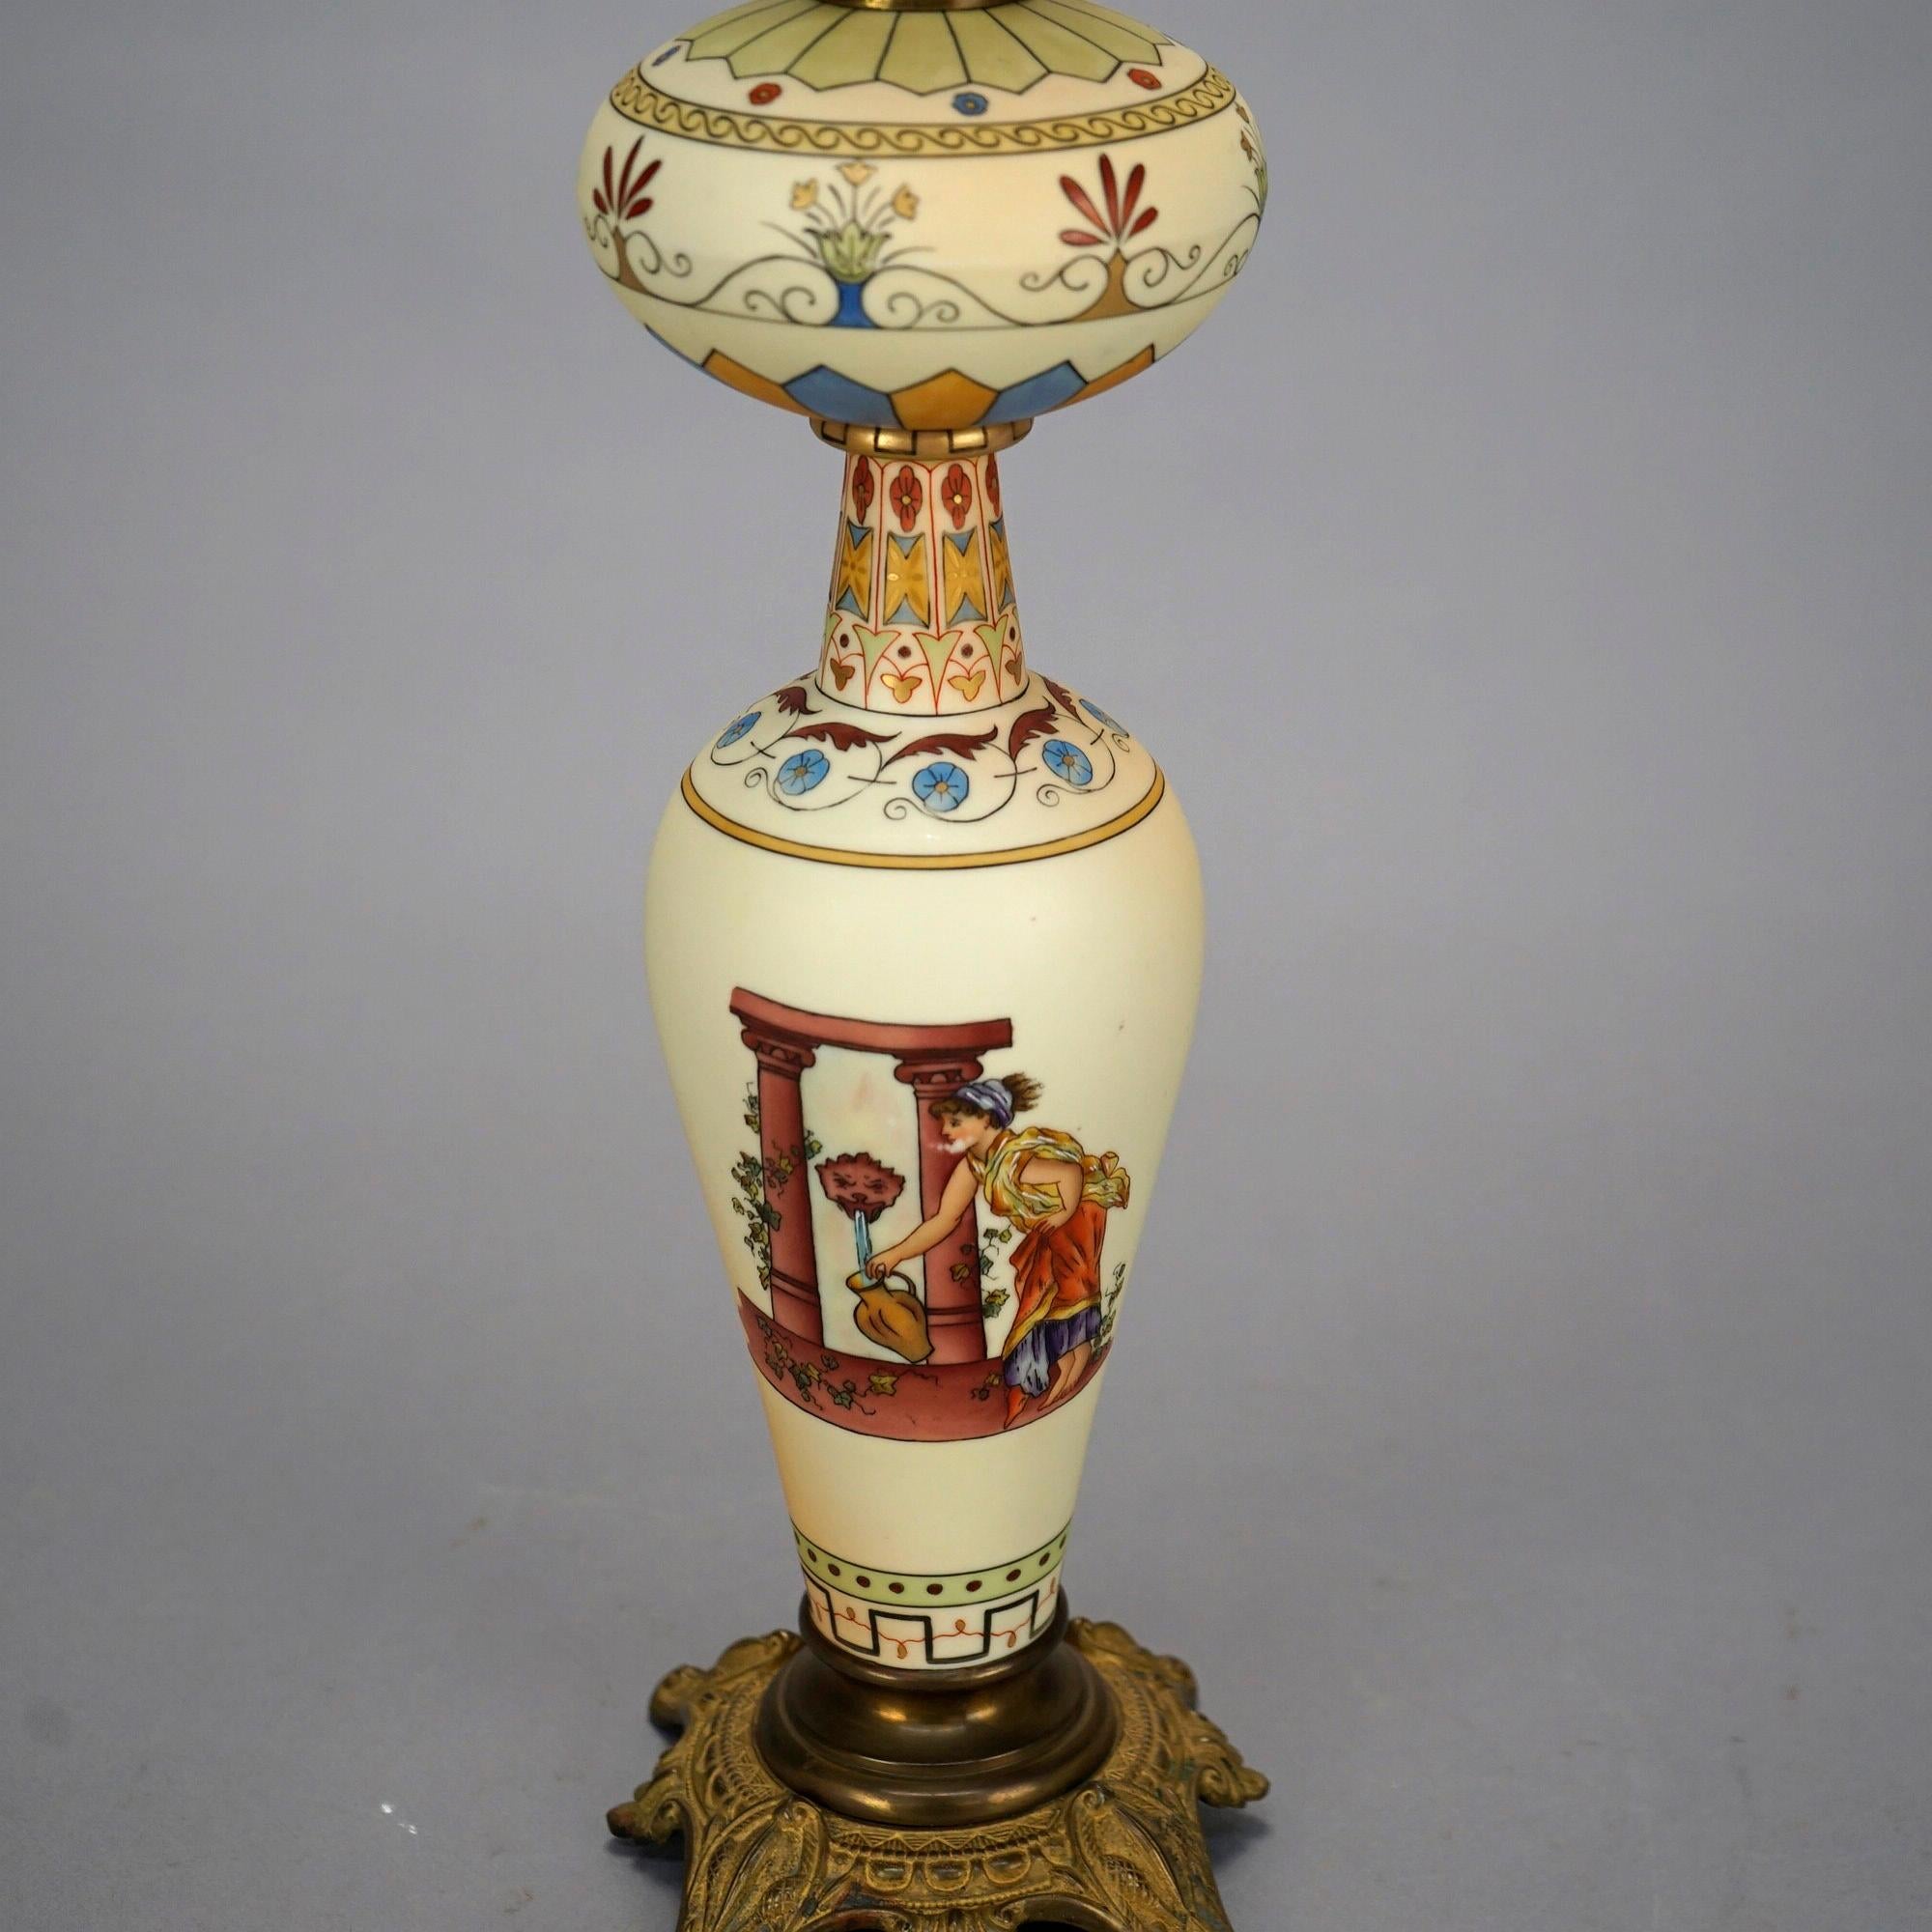 Antique Italian Hand Painted Porcelain Banquet Oil Lamp with Genre Scene, 19th C 1